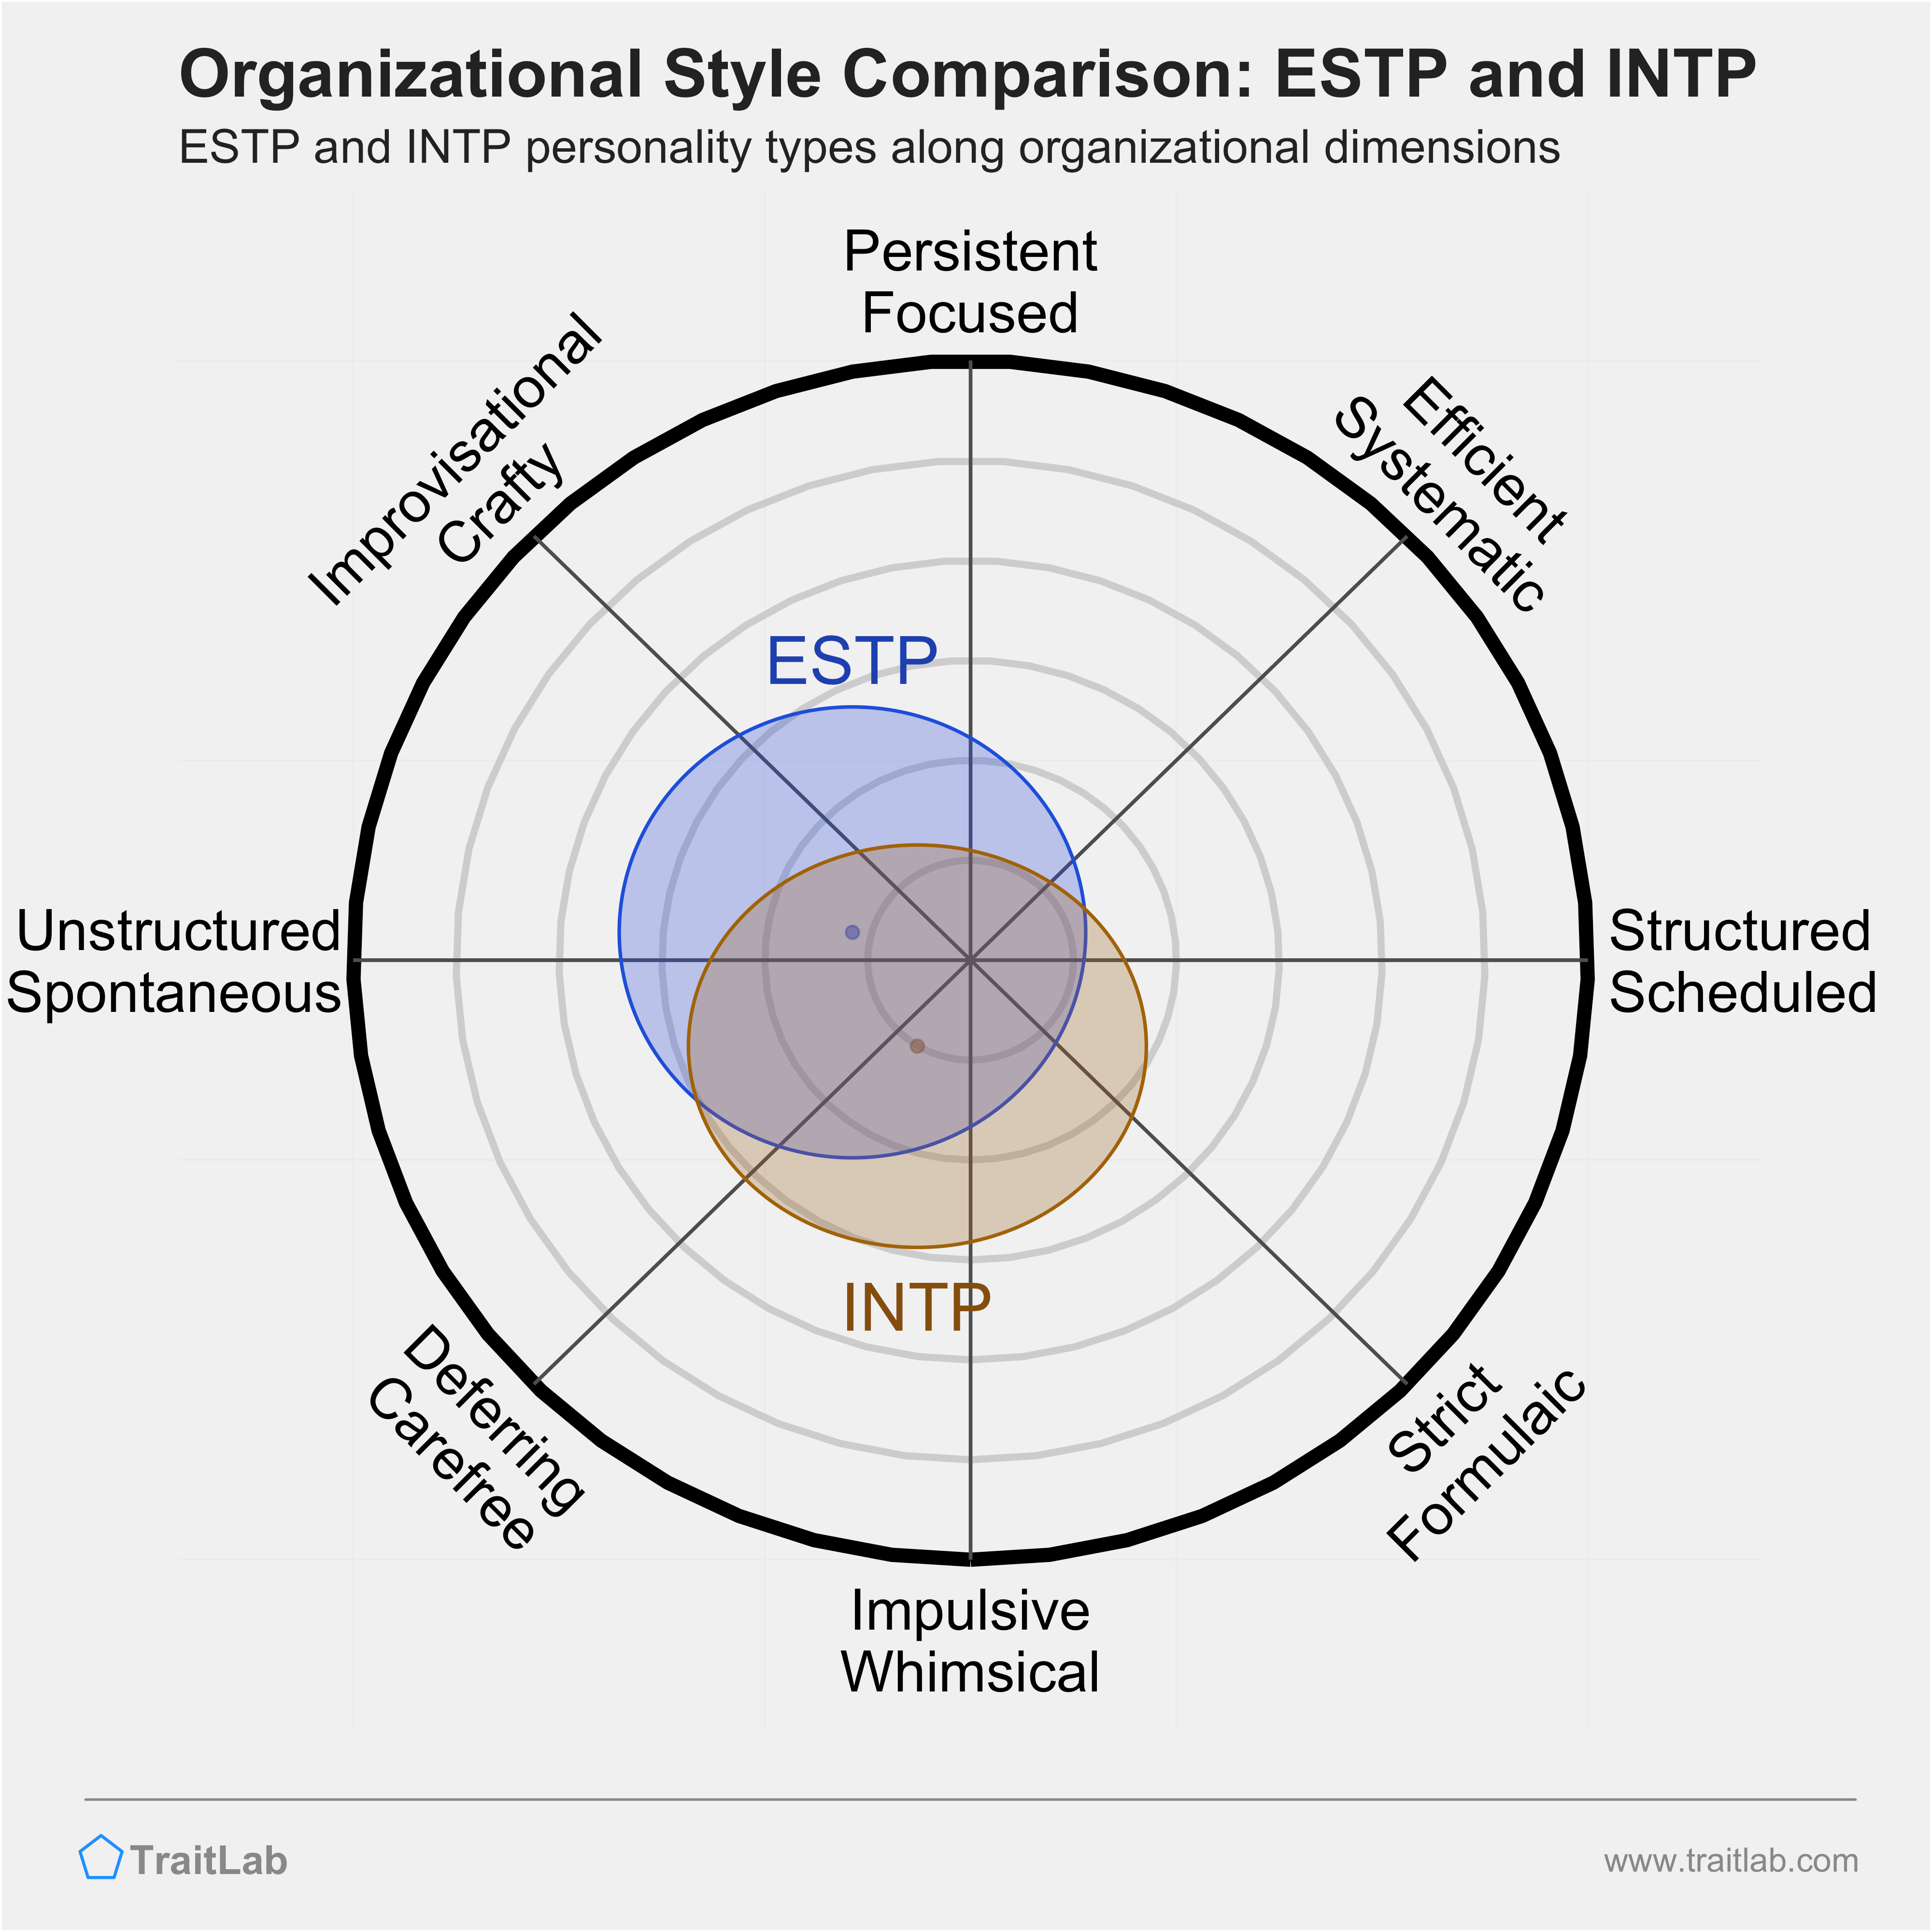 ESTP and INTP comparison across organizational dimensions